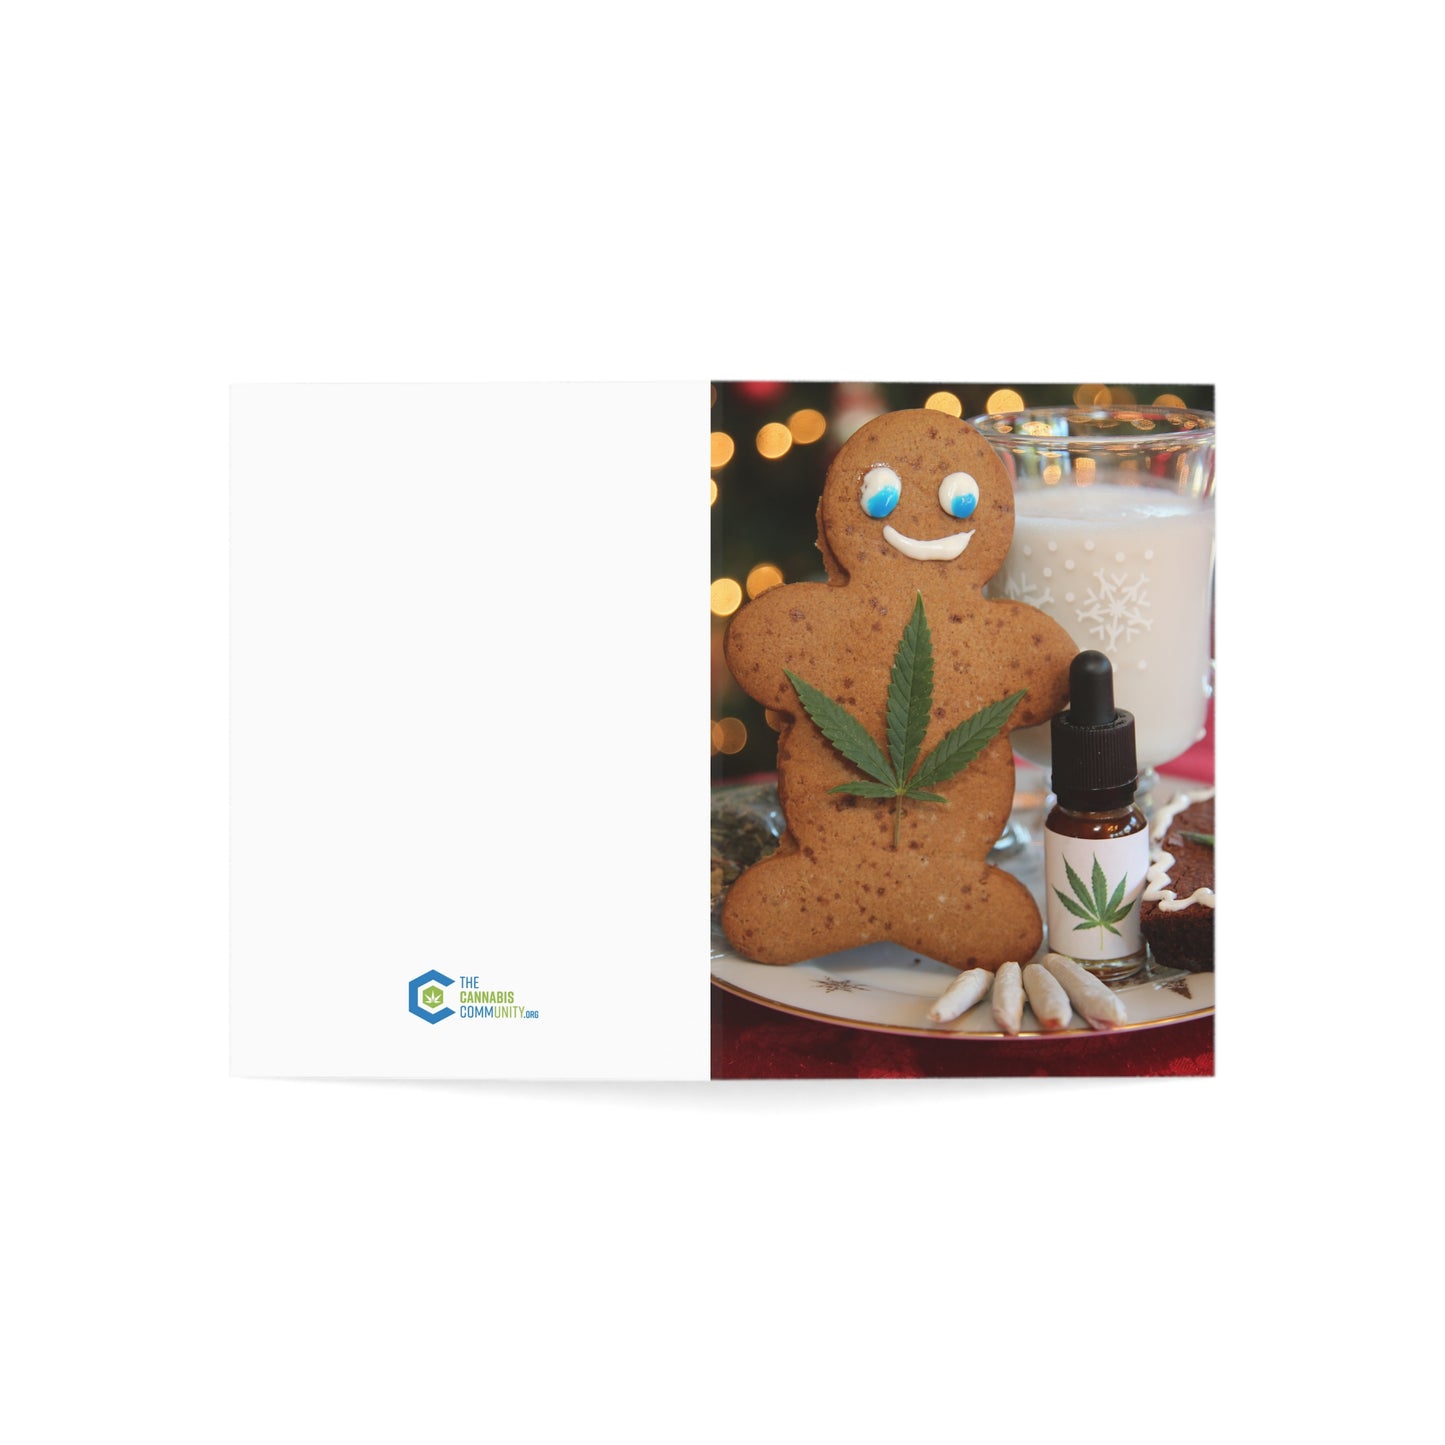 Gingerbread Man Edible Merry Litmas Christmas Greeting Cards (1, 10, 30, and 50pcs)